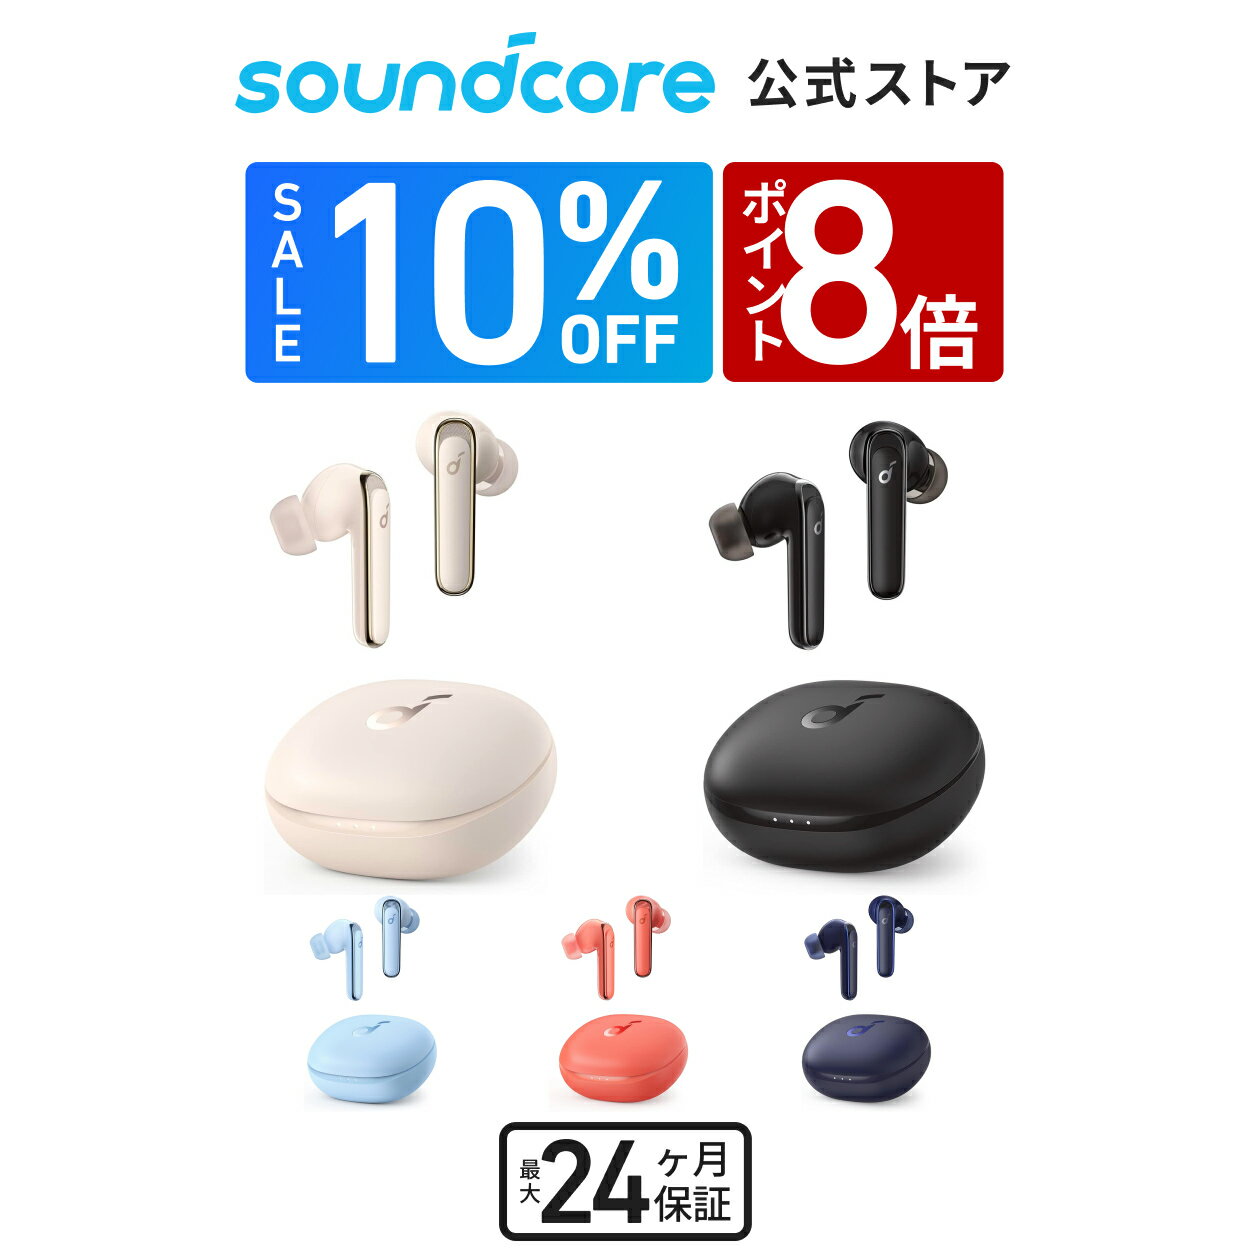 Anker Soundcore Life P3【完全ワイヤレスイヤホン / Bluetooth5.2対応 / ワイヤレス充電対応 / ウルトラノイズキャンセリング / 外音取り込み / IPX5防水規格 /